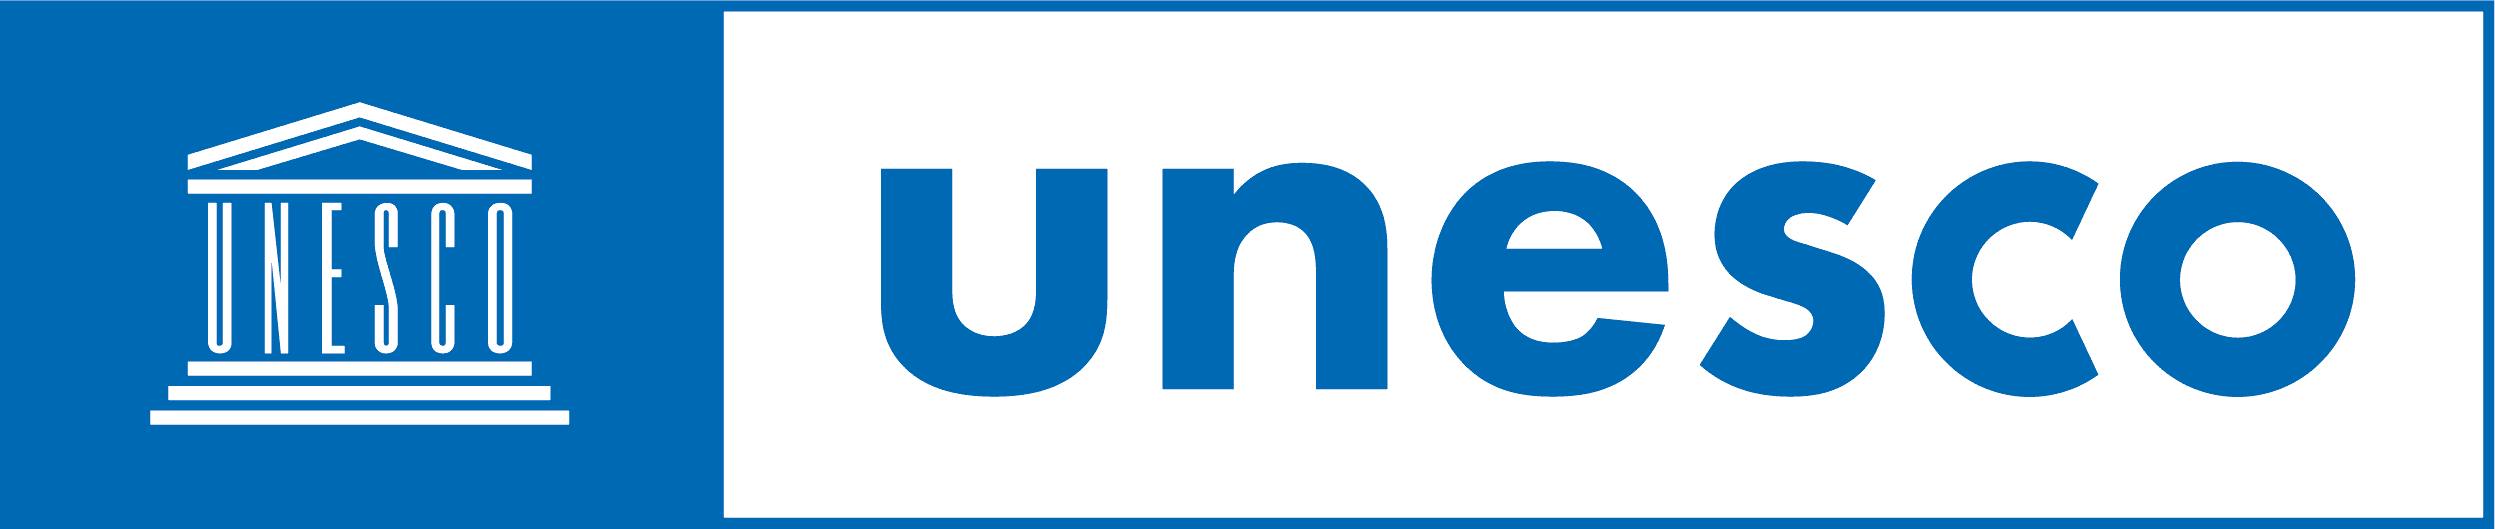 UNESCO Logo Hor Blue.png